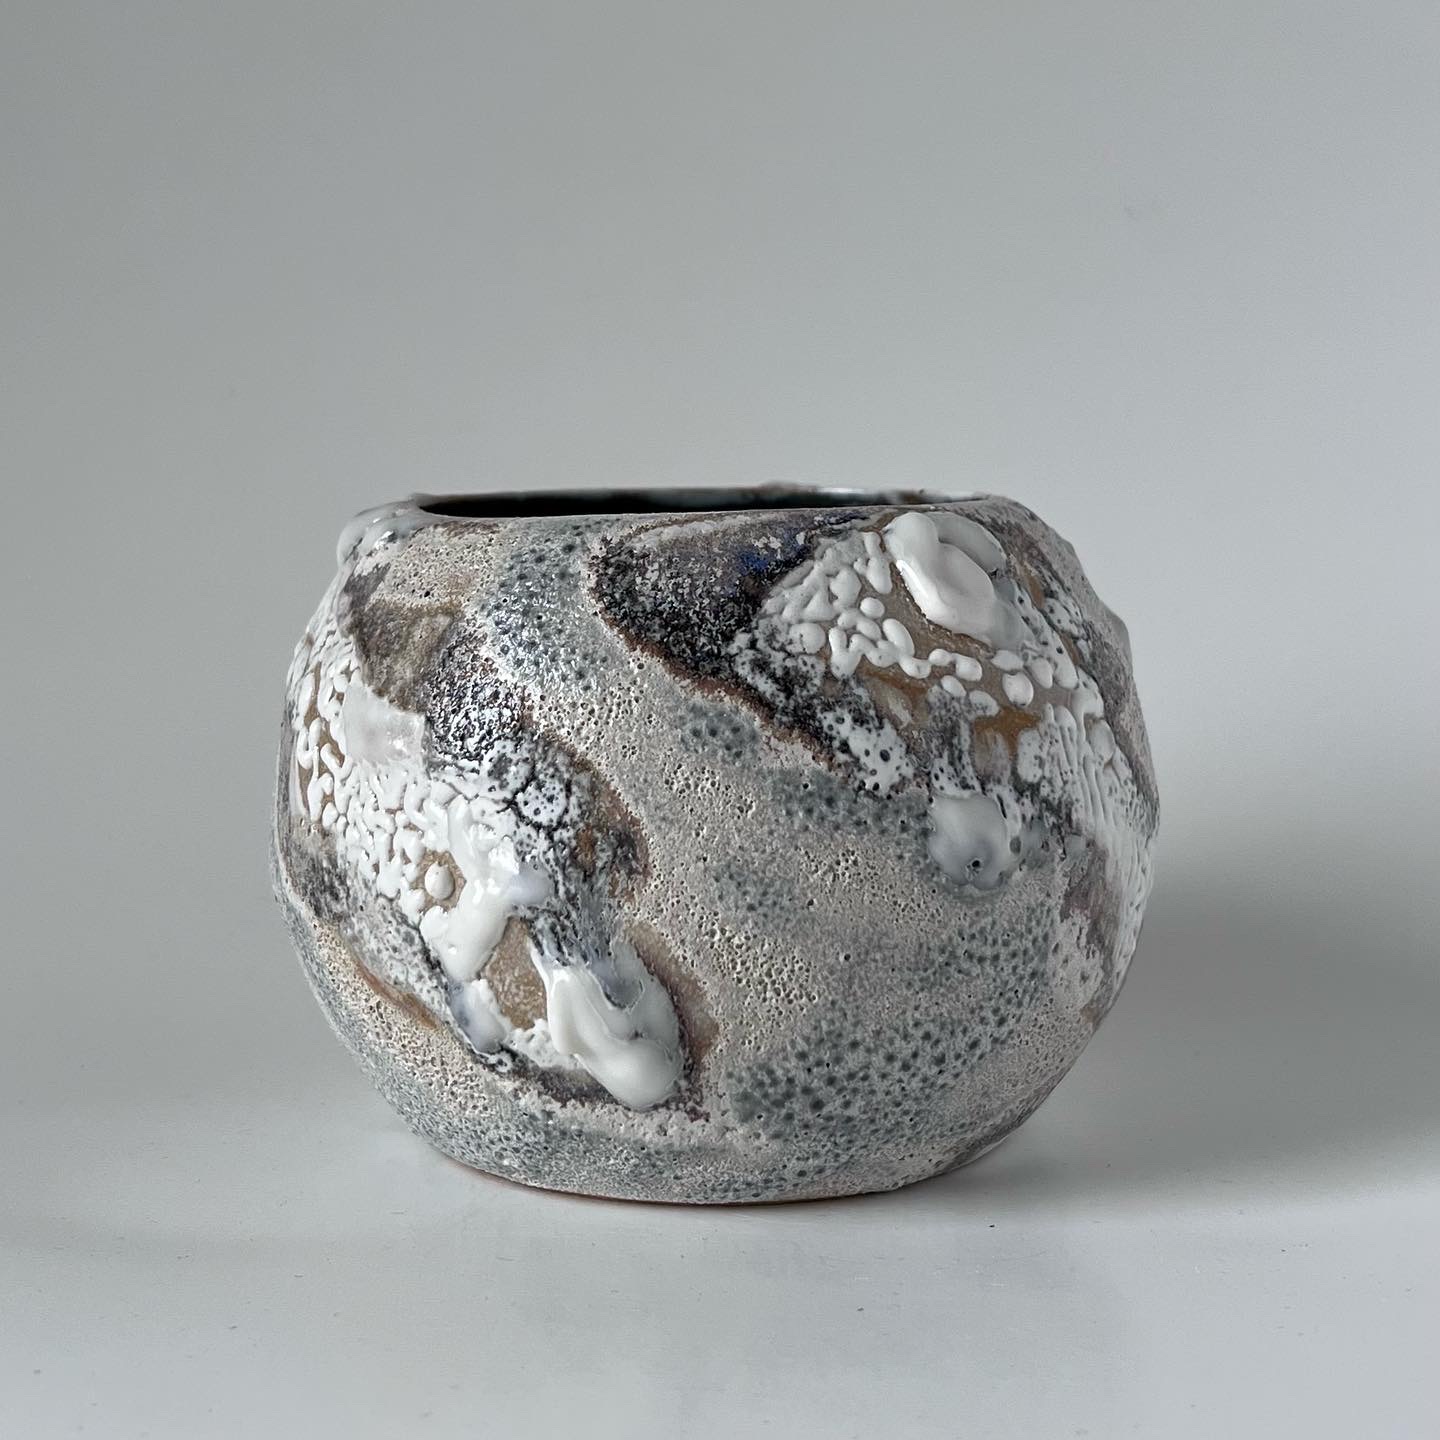 Krystal Yavicoli, "We Live on the Moon Now," 2023. Ceramic and glaze, 3 ½ x 4 ¼ x 4 ¼ in.